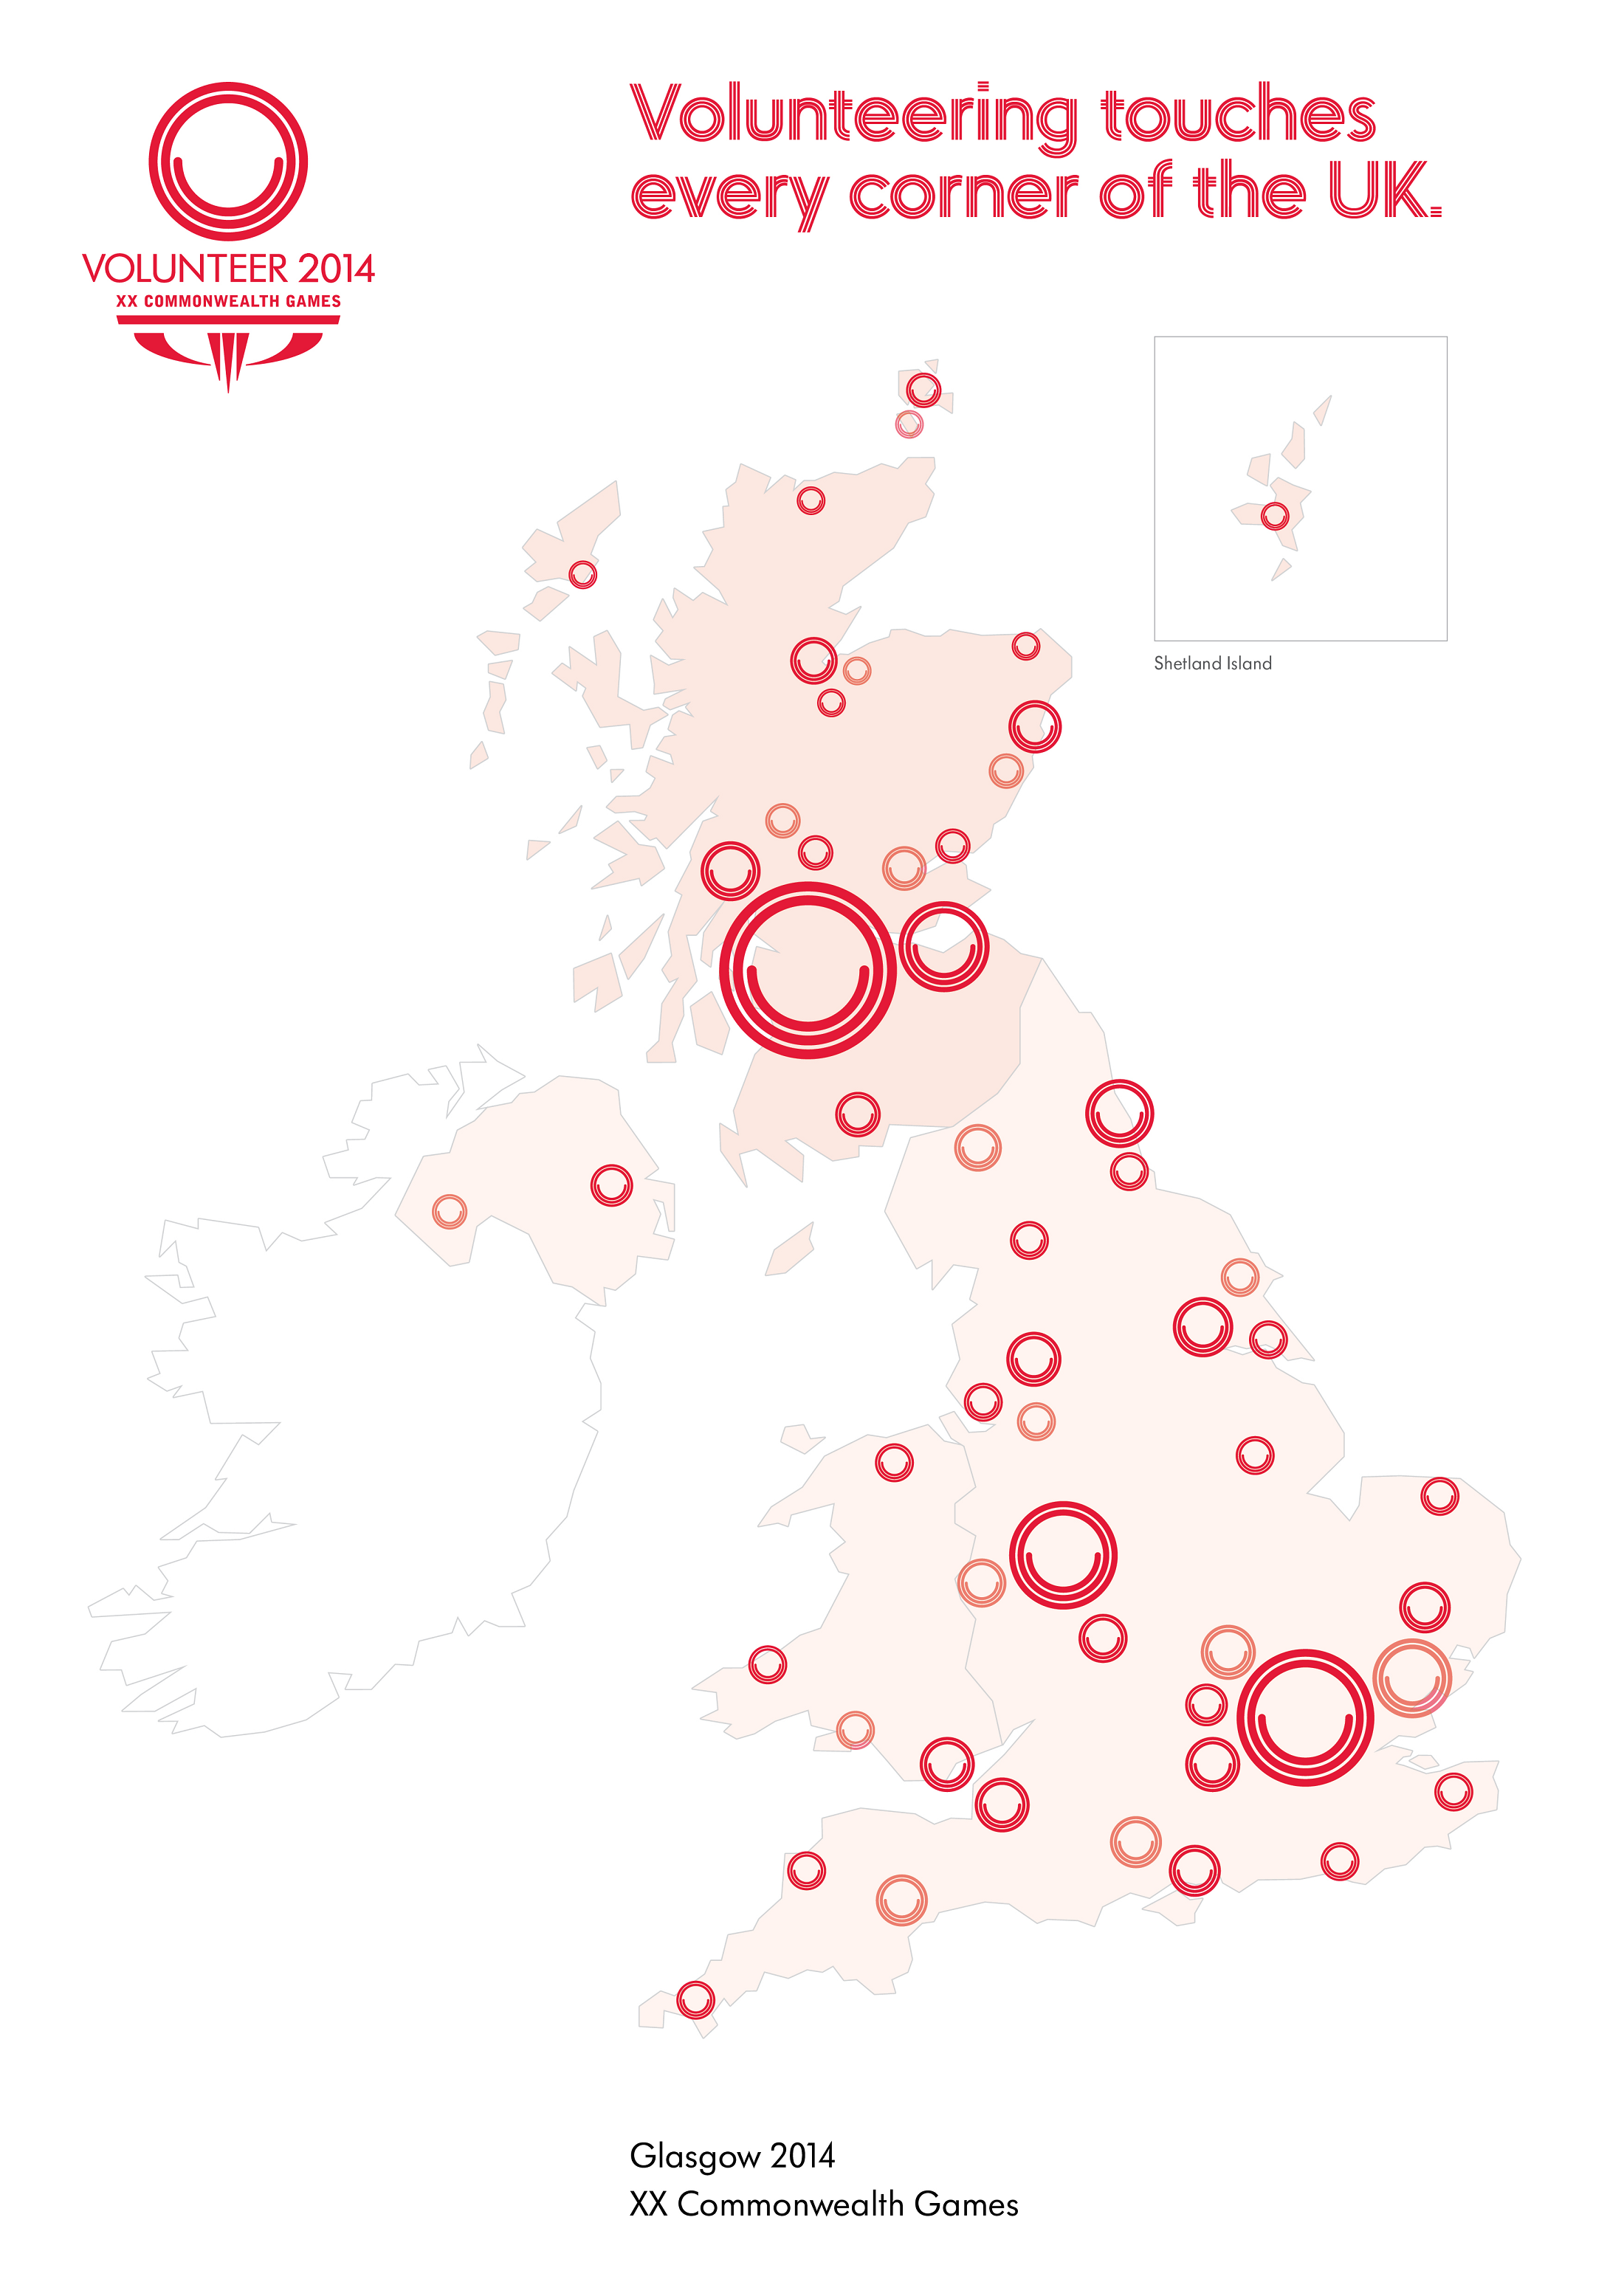 Glasgow 2014 volunteering map 2